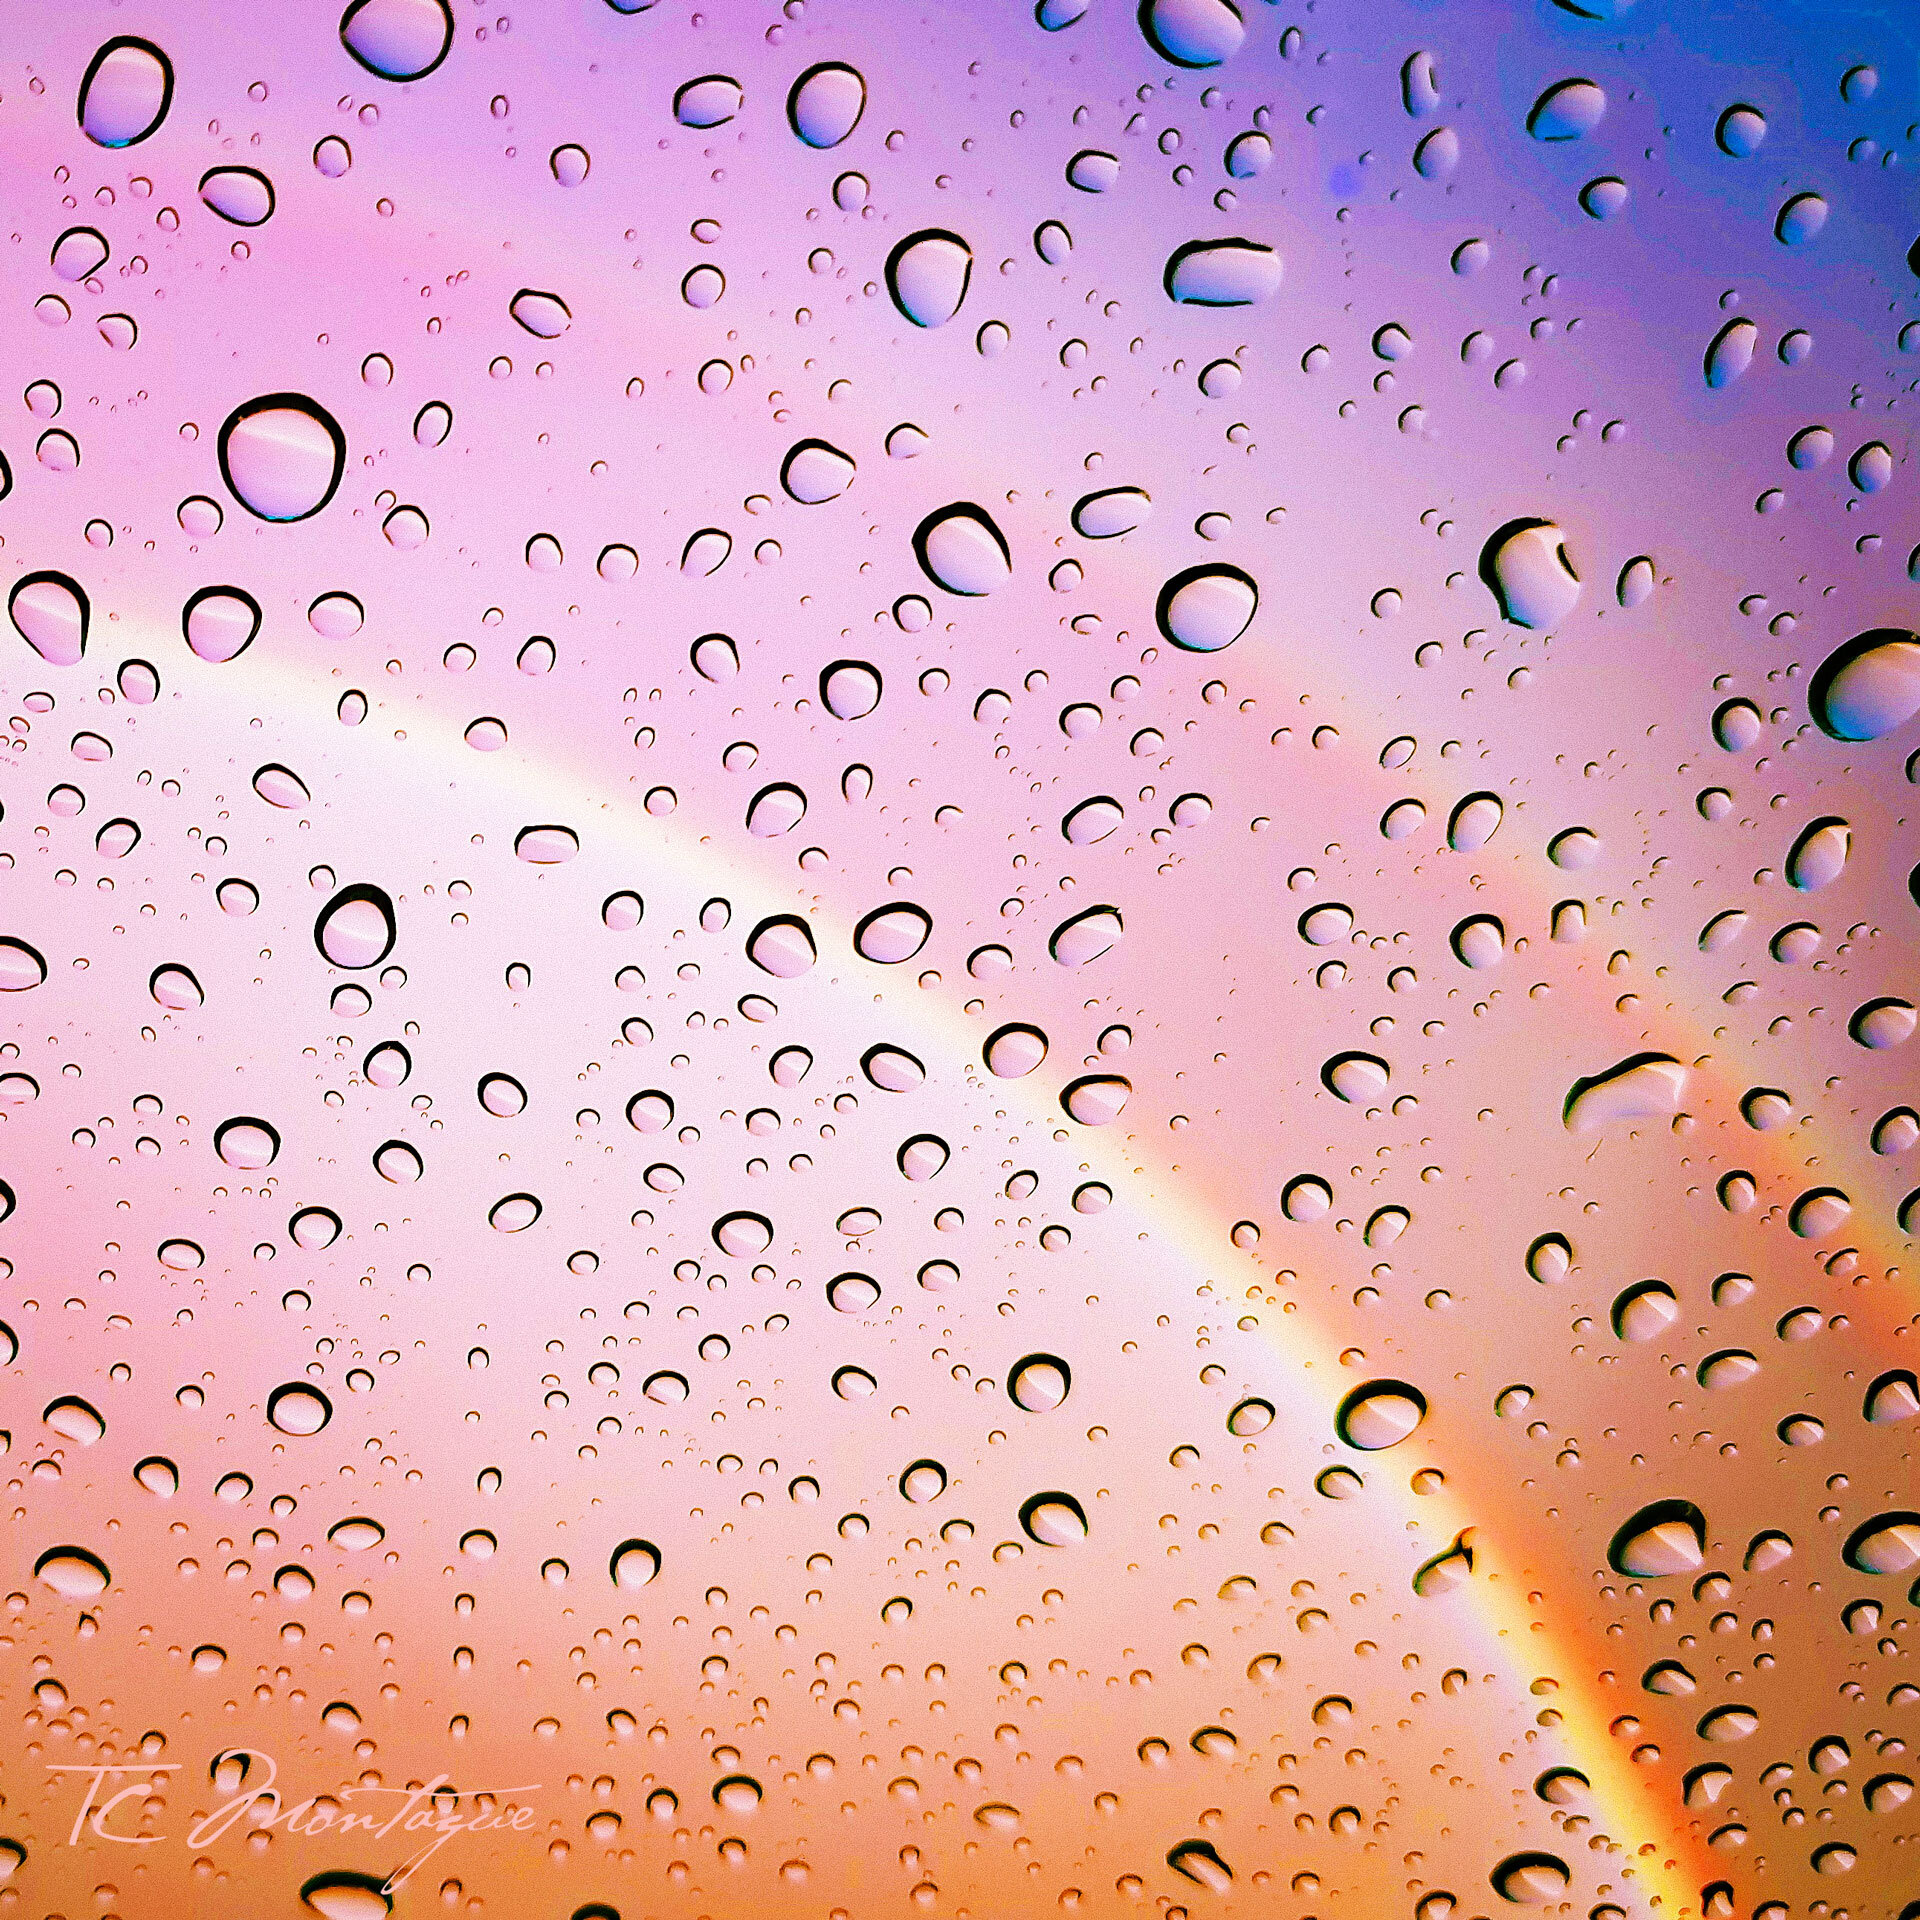 Rainy days and double rainbows - TC Montague